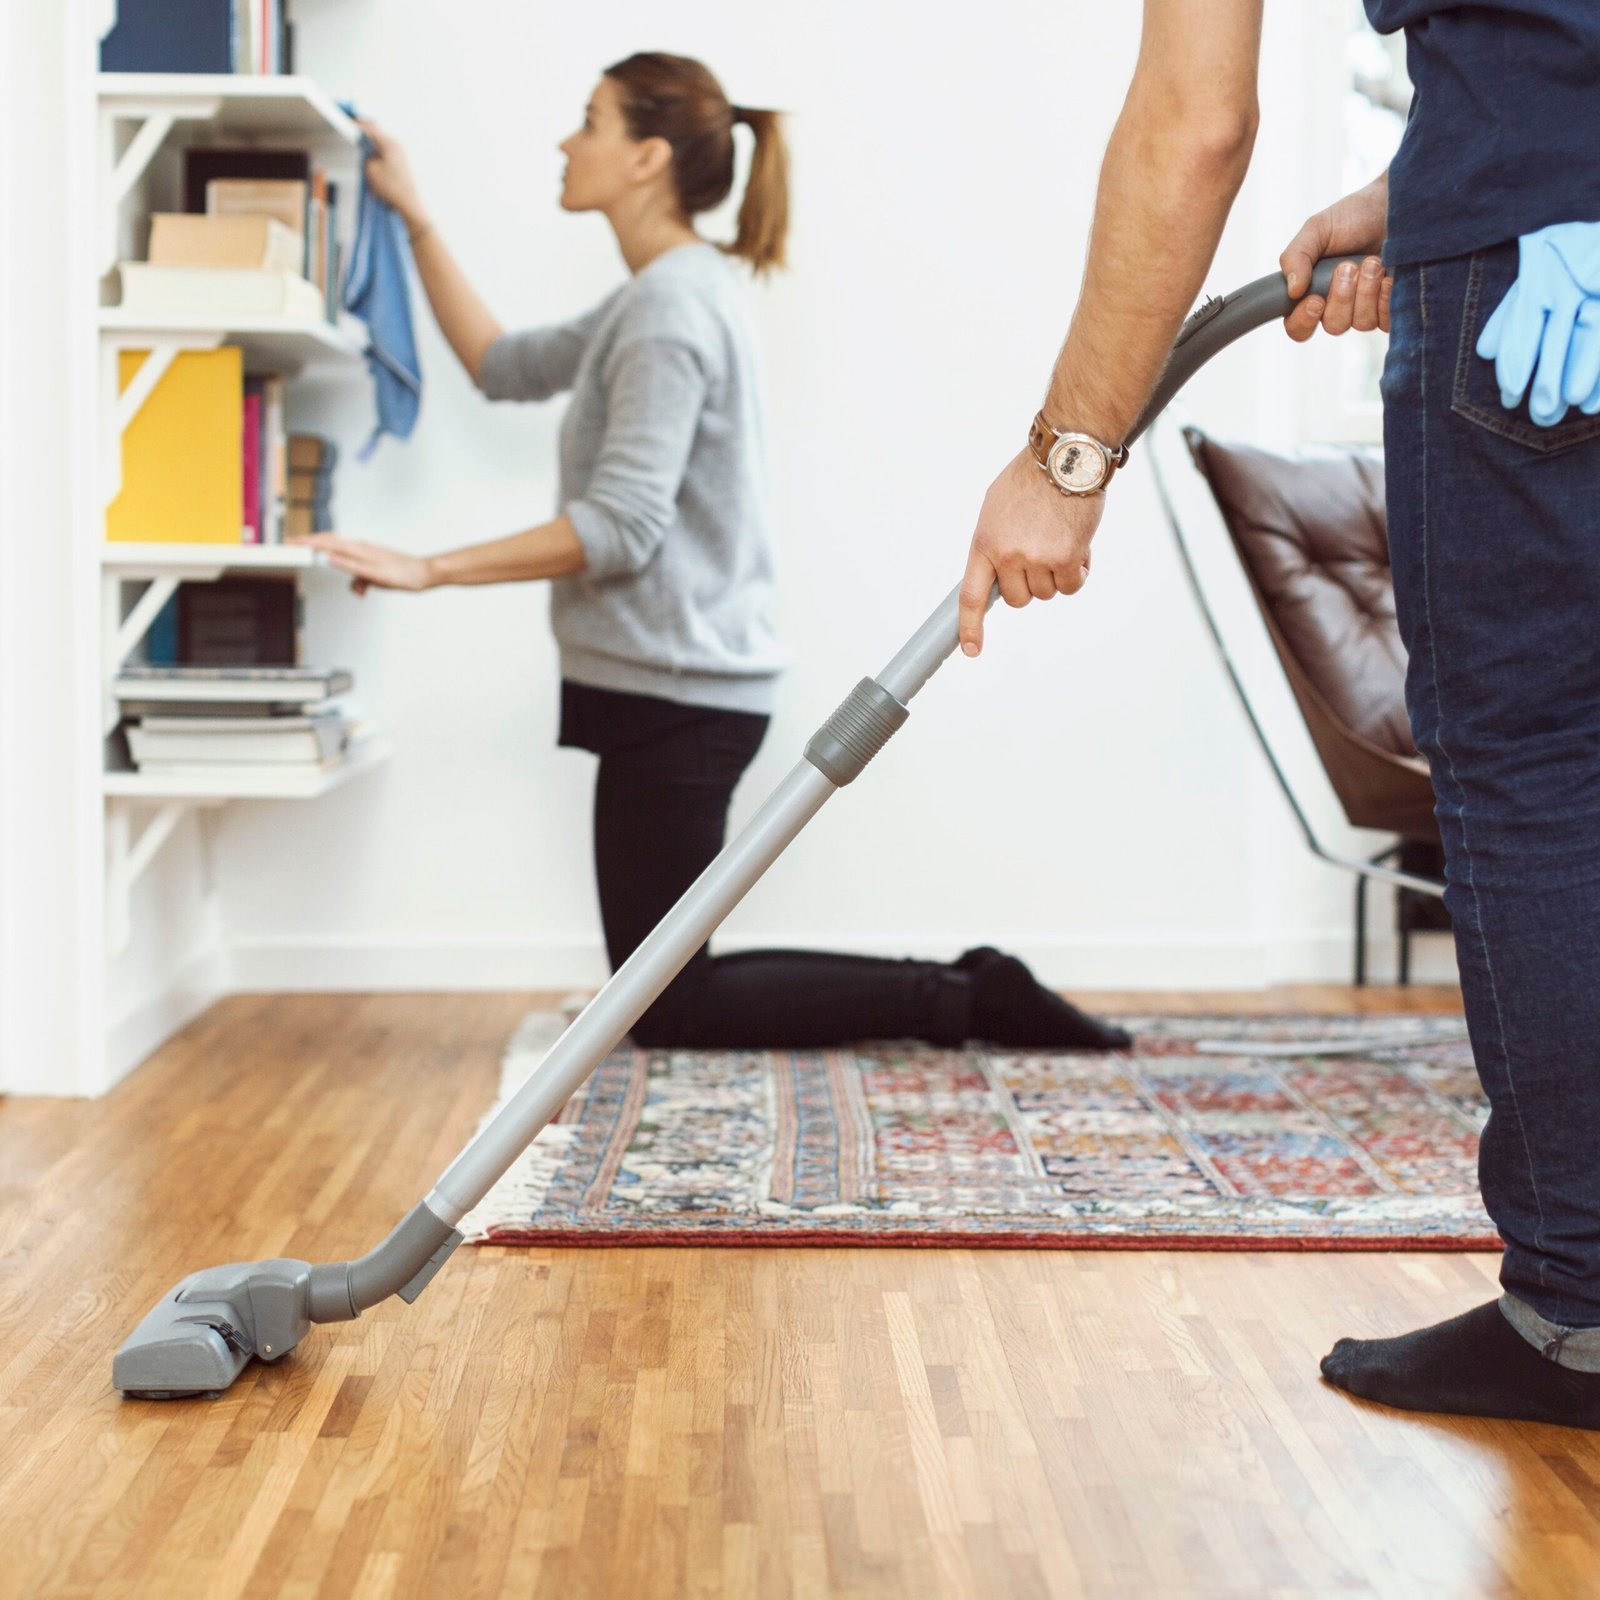 Finally, men pick up more chores at home During Lockdown